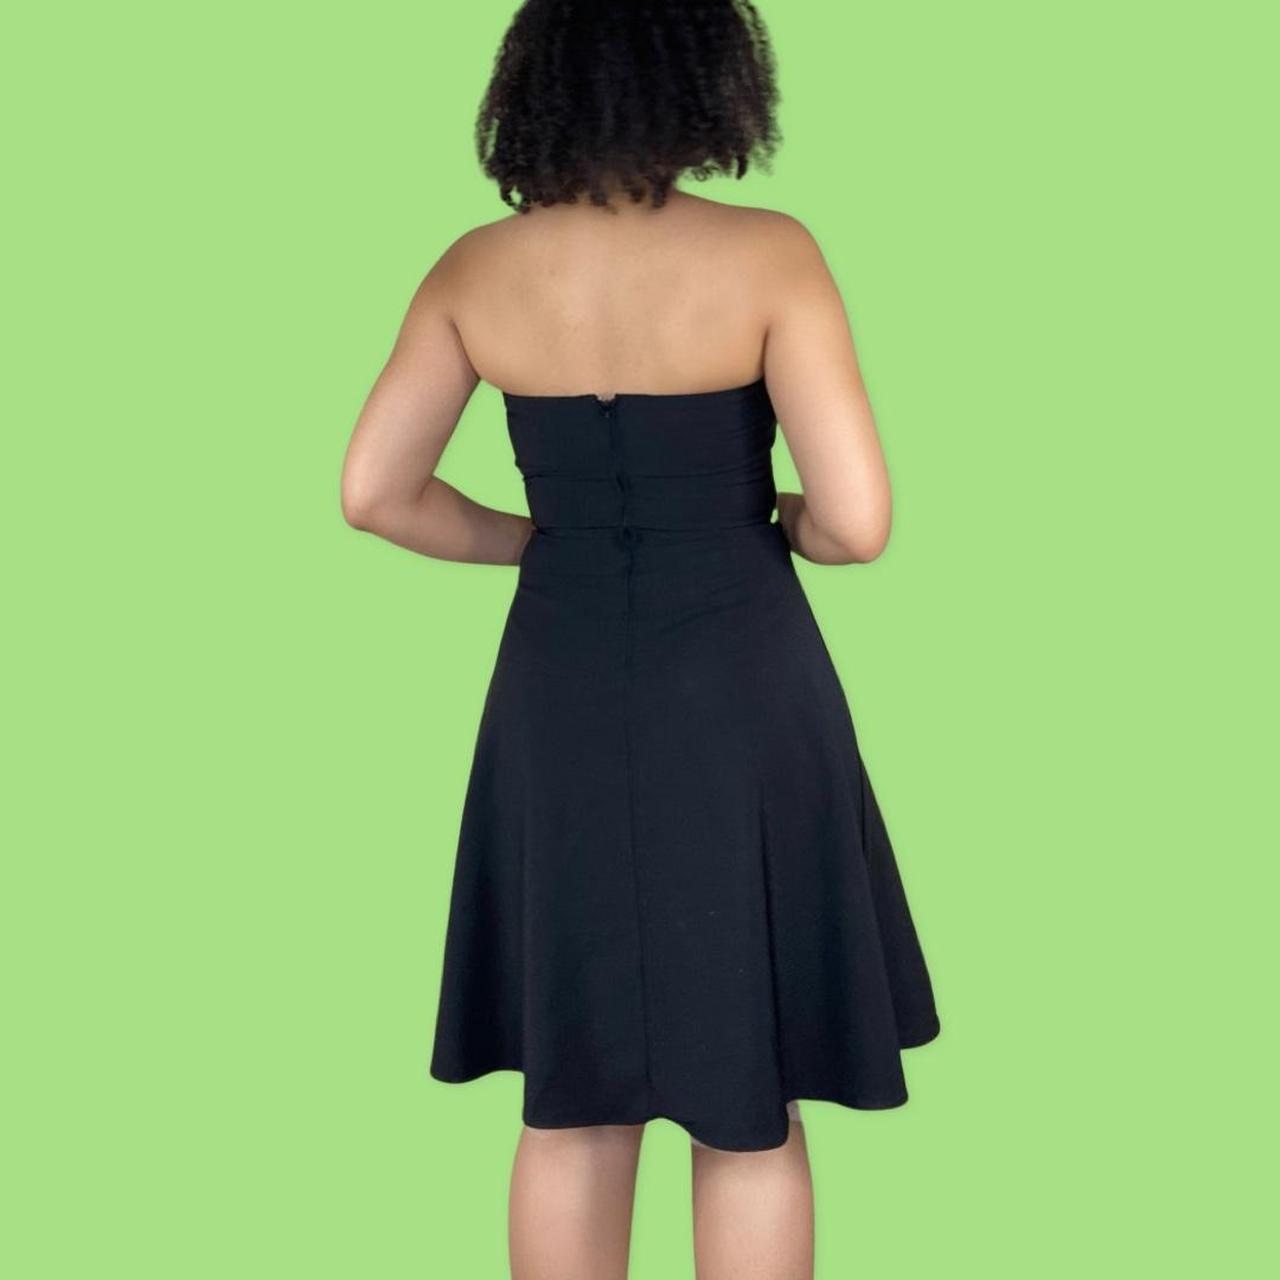 Product Image 4 - Strapless Grunge Core Dress. Size: